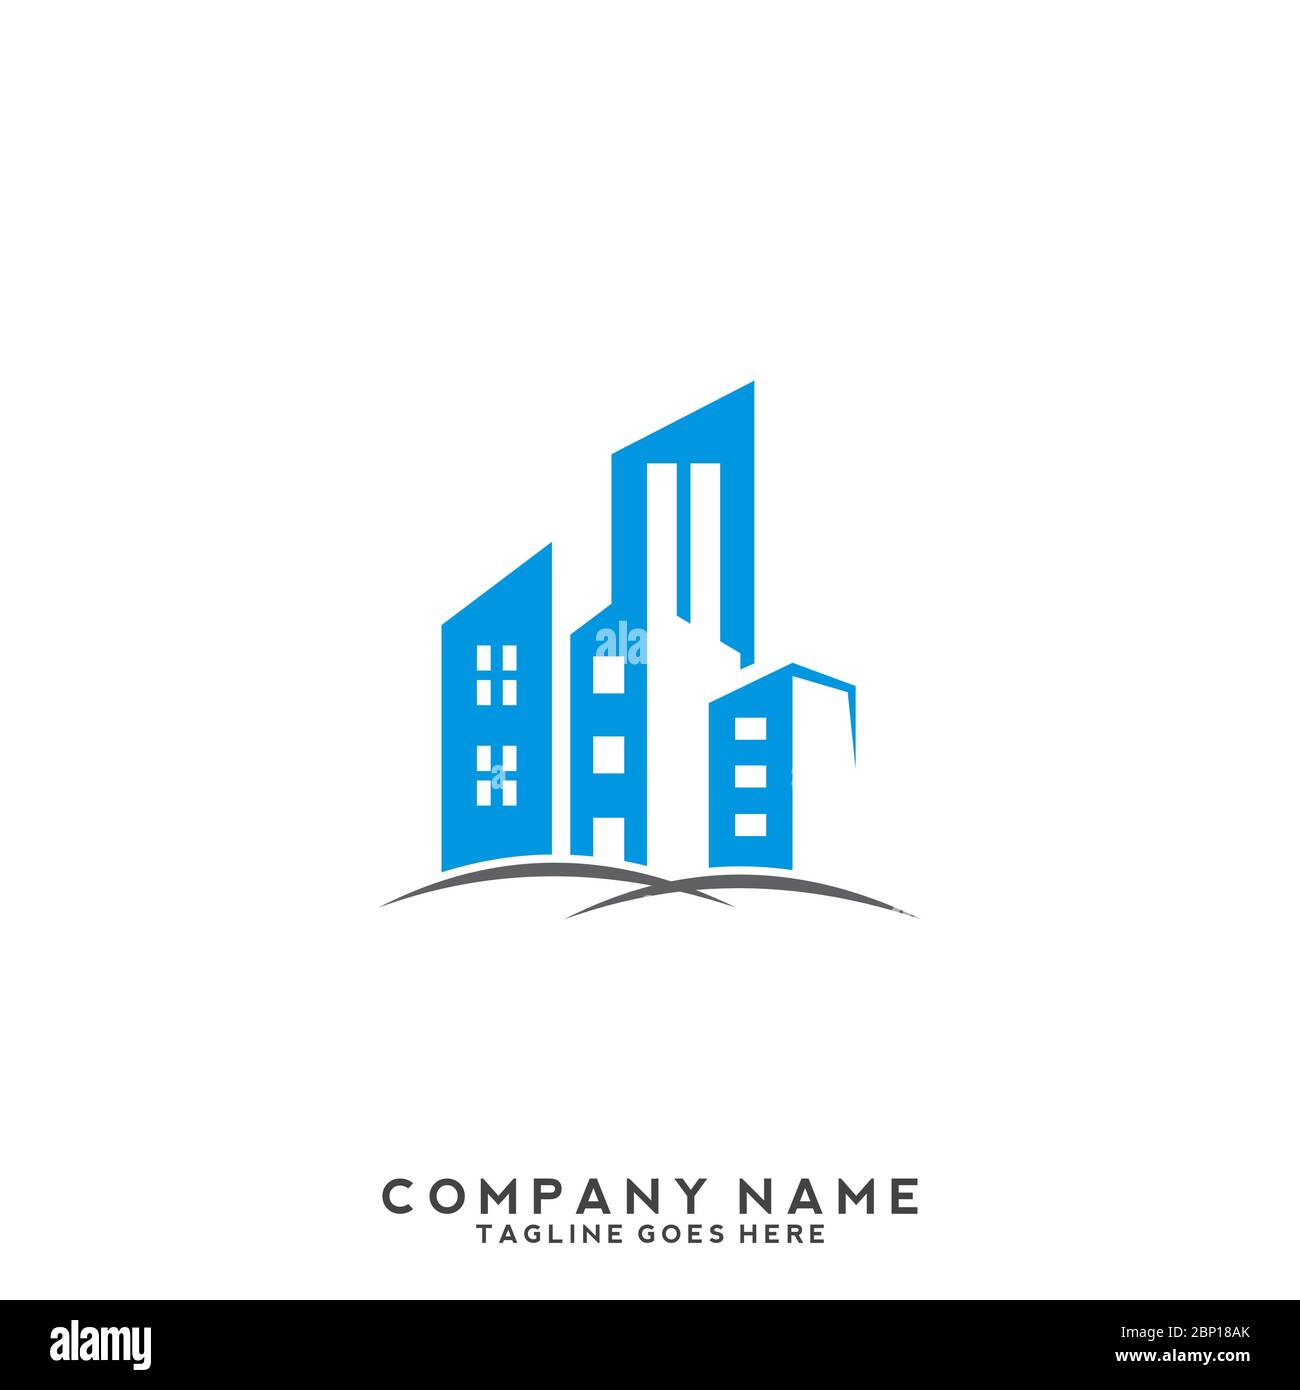 Real Estate Logo Design. Creative abstract real estate icon logo and business card template. Stock Vector